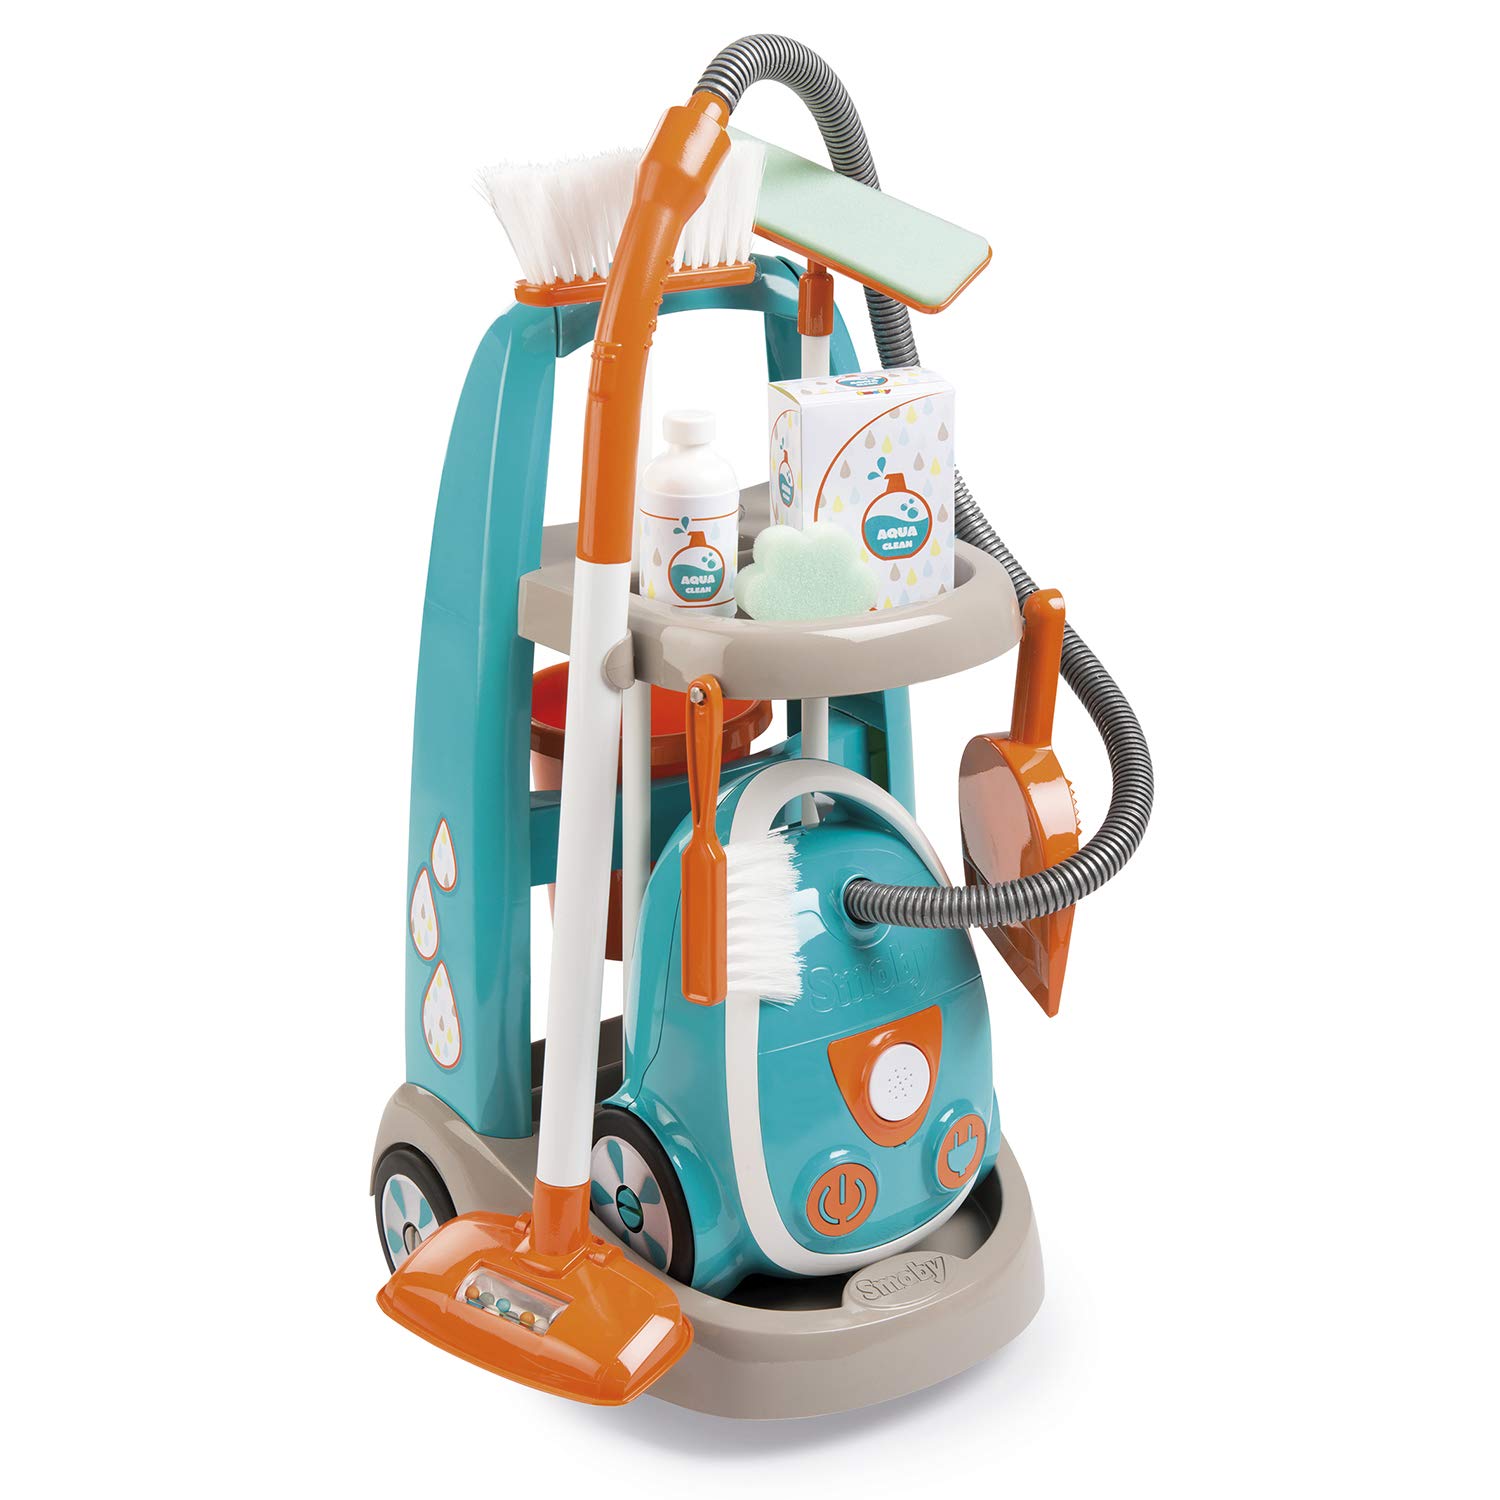 Bosch Smoby Reinigungstrolley Vacuum Cleaner Turquoise